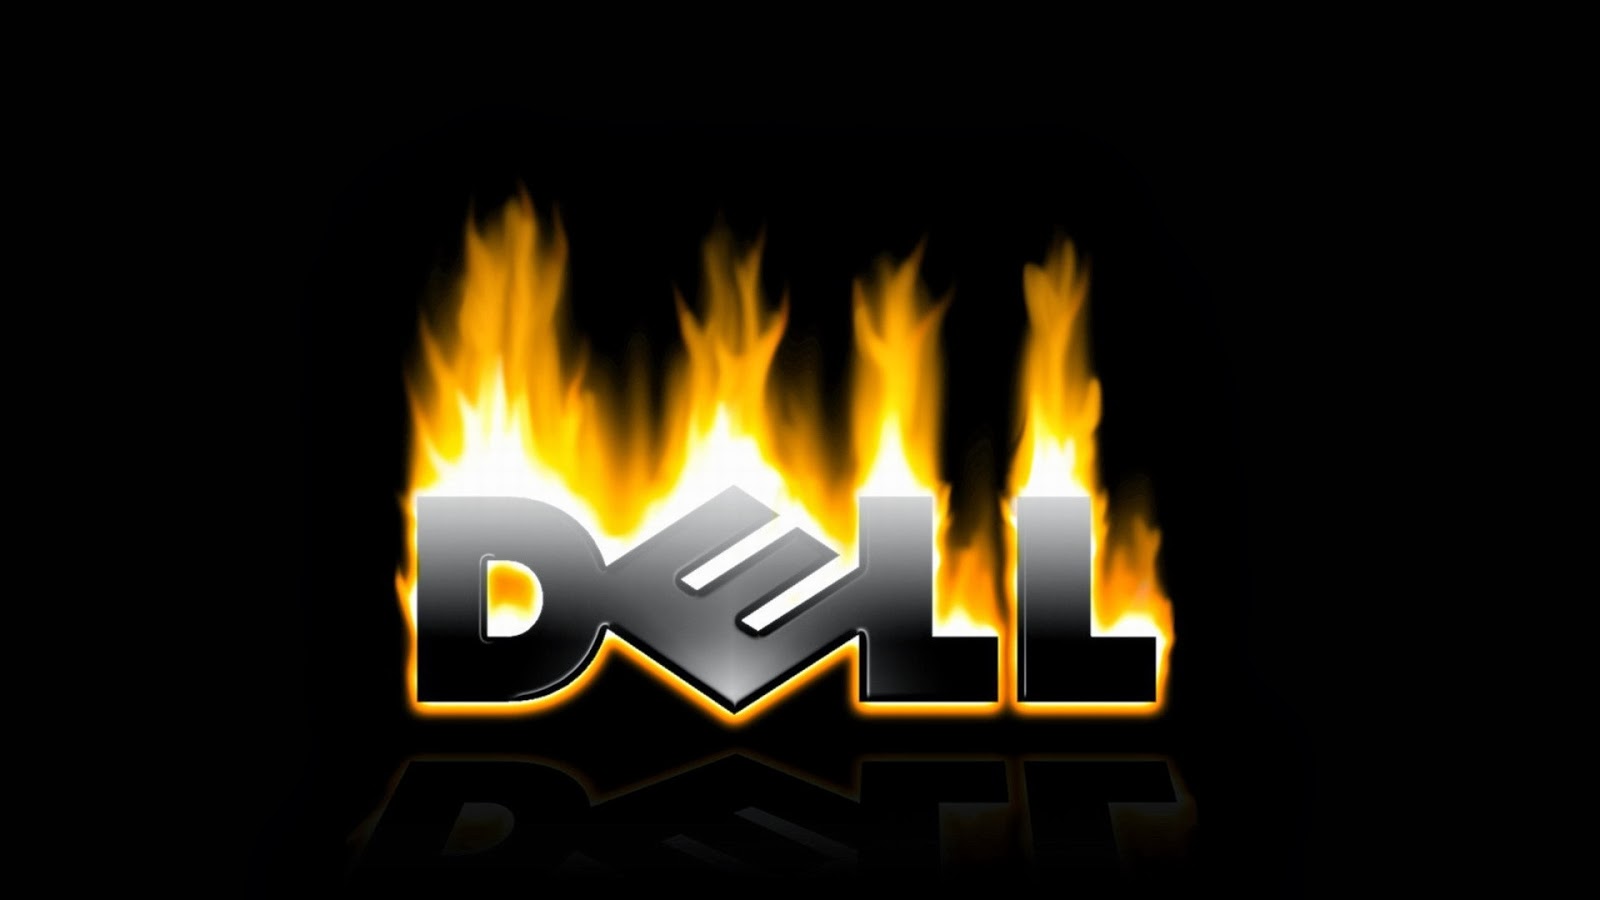  Dell  HD  Wallpapers  Desktop  Wallpapers 